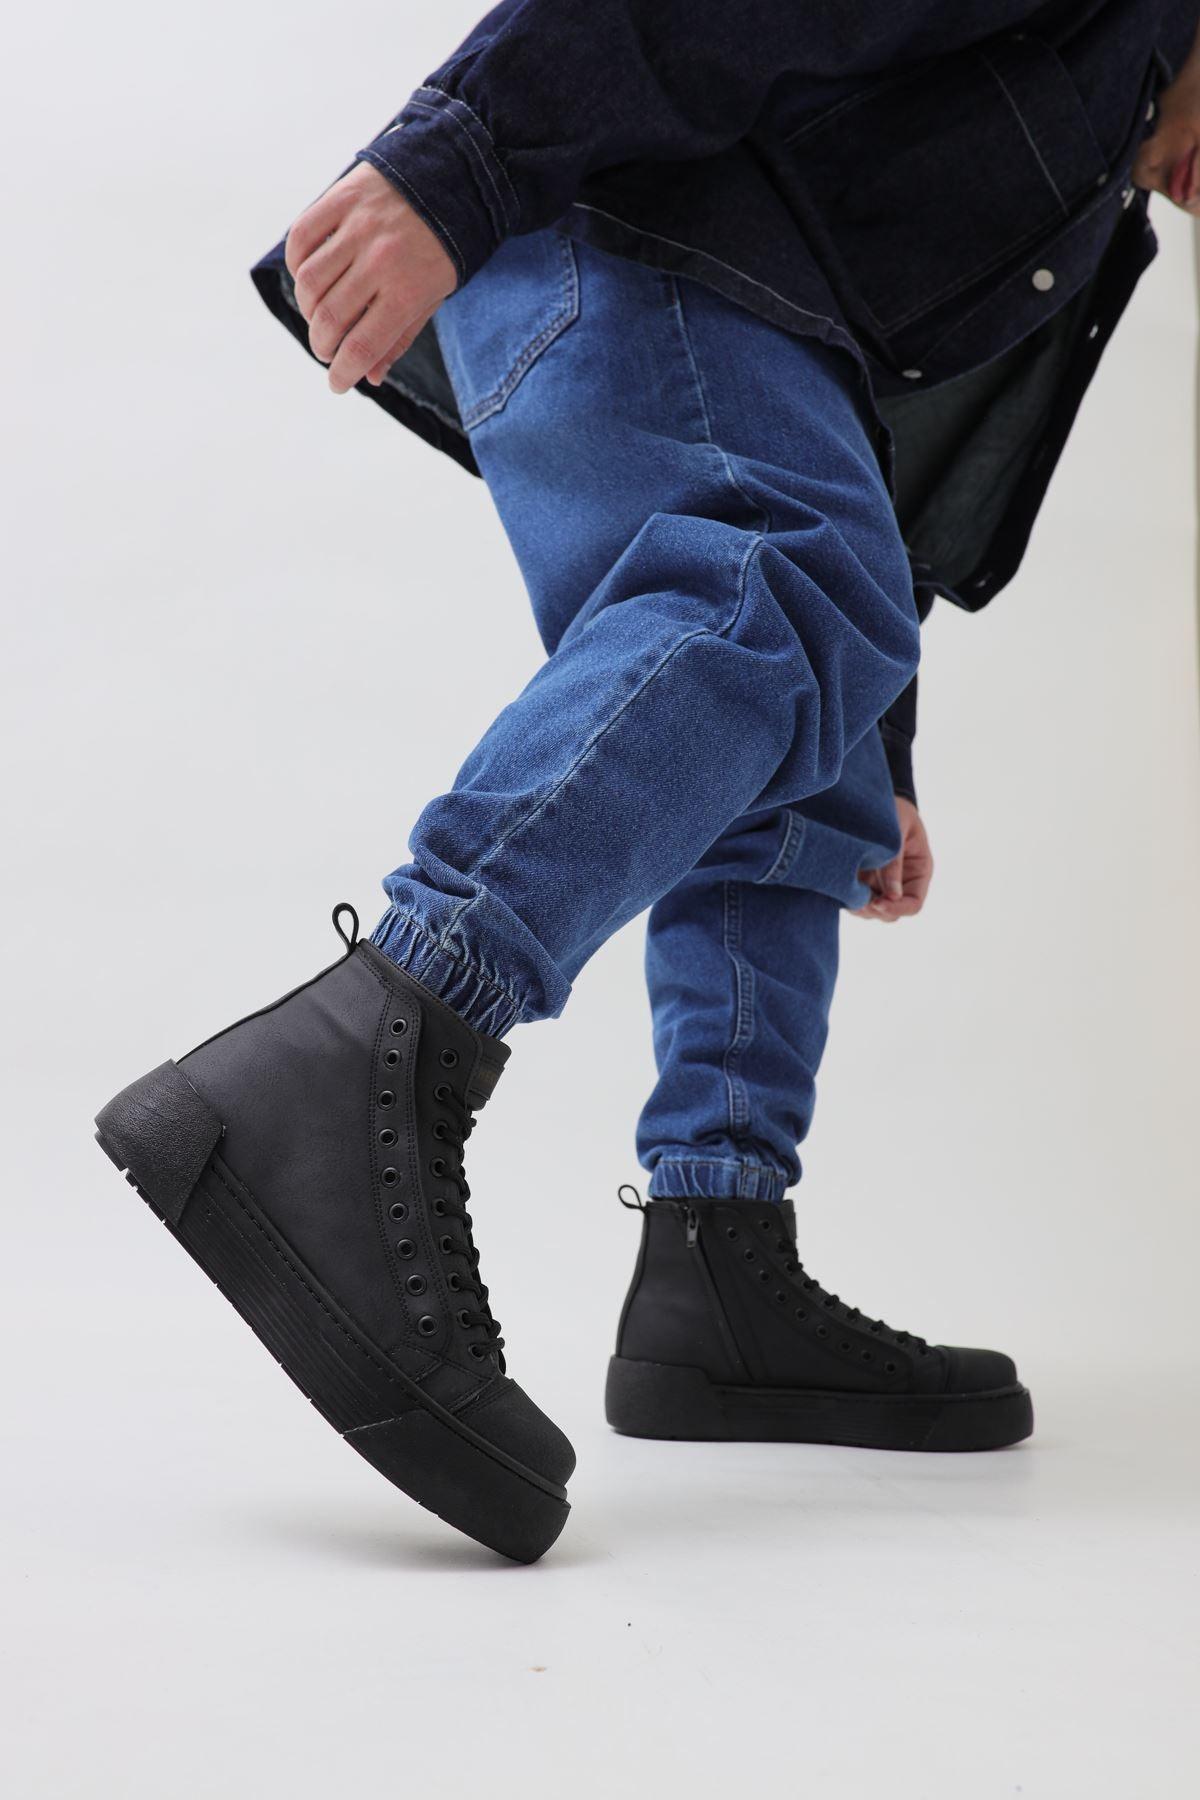 CH167 ST Men's Boots BLACK/BLACK - STREET MODE ™